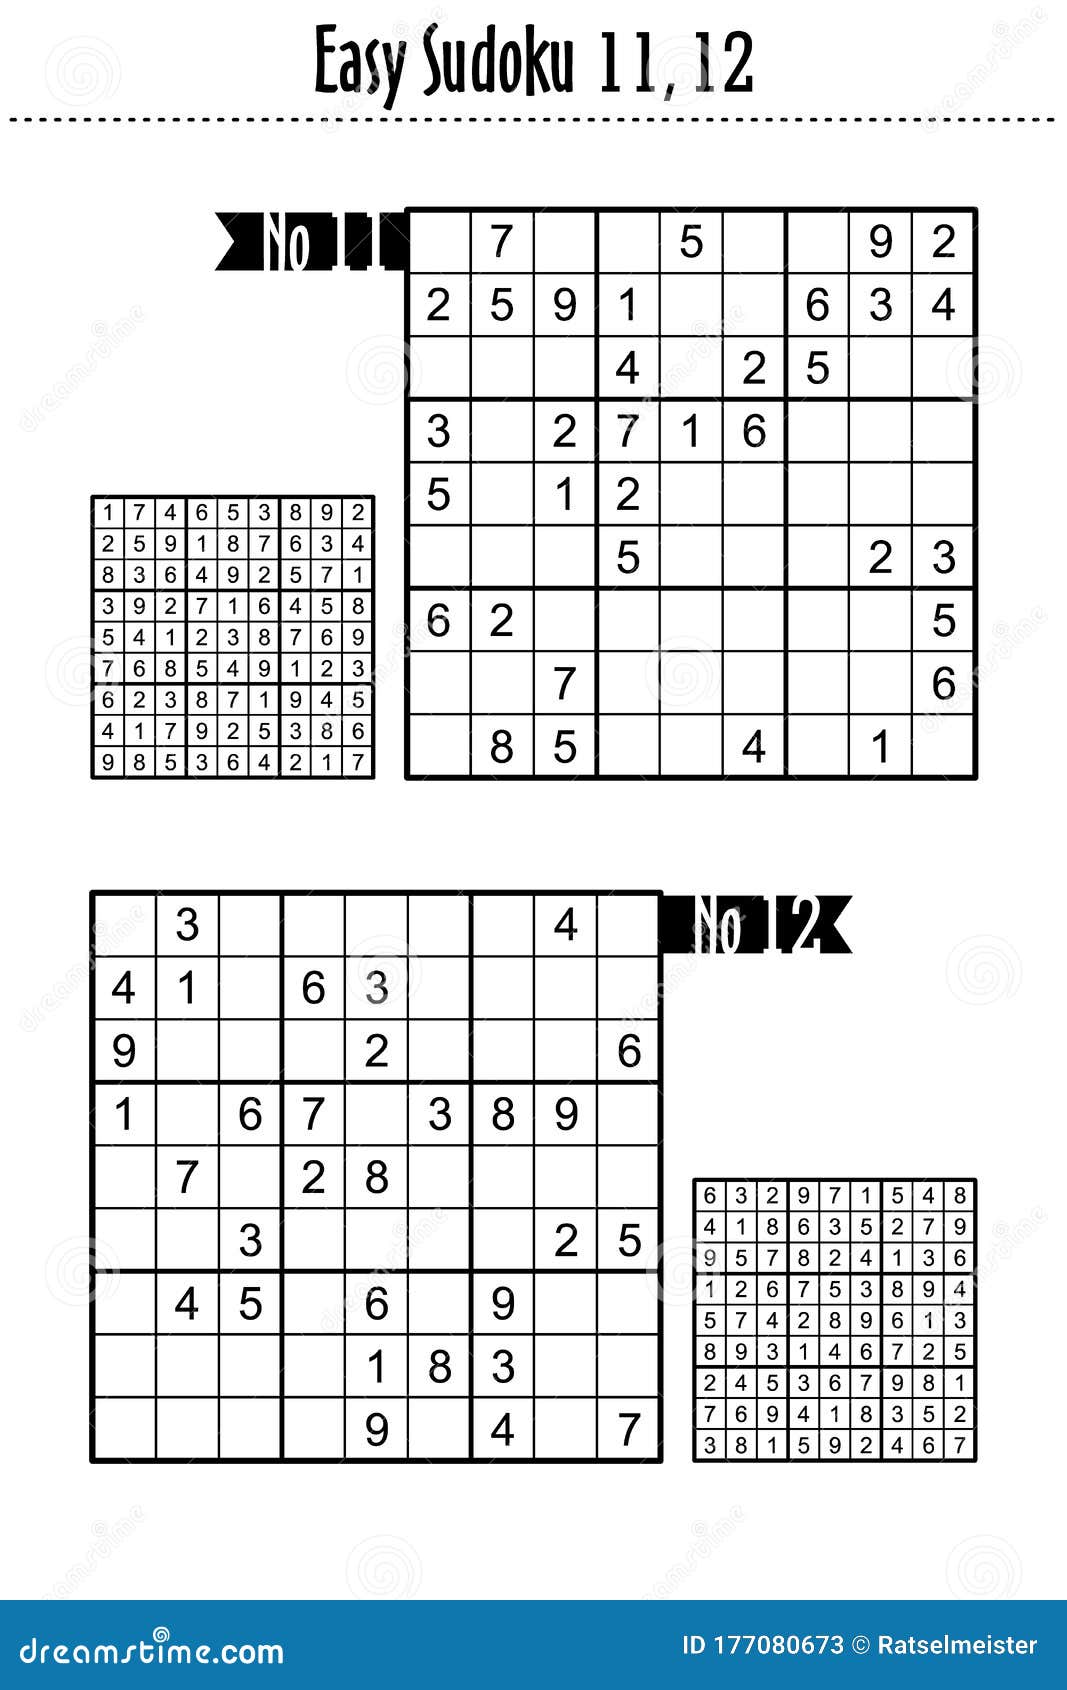 Privilegio preferir folleto Easy Level Sudoku Puzzles 11, 12 Stock Vector - Illustration of abstract,  includedn: 177080673